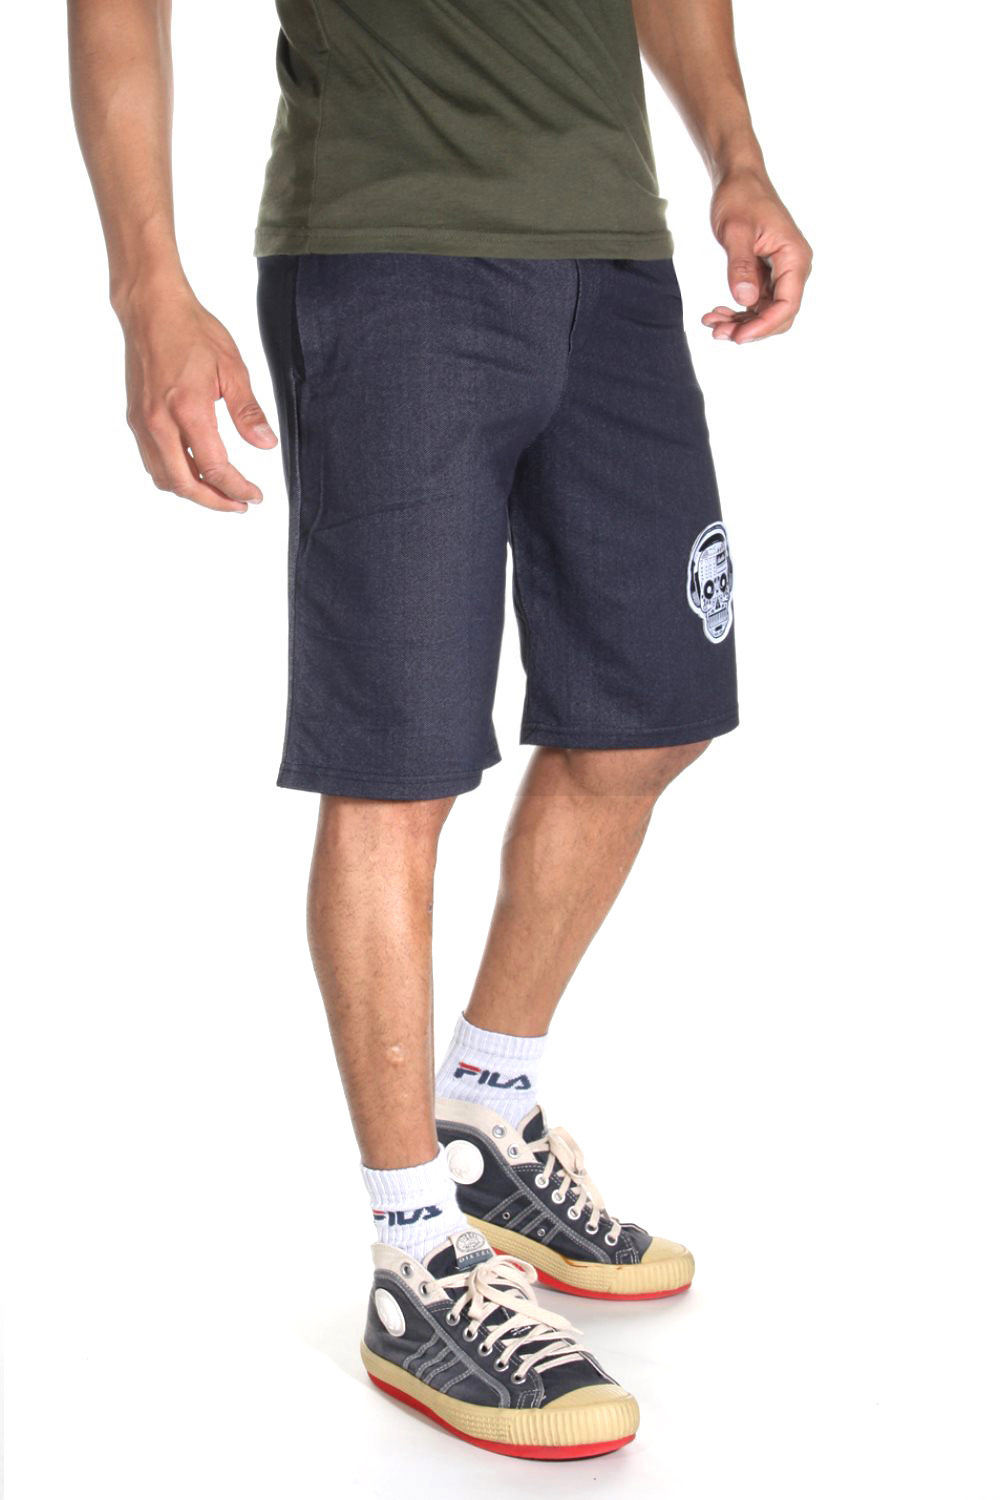 FIYASKO shorts at oboy.com